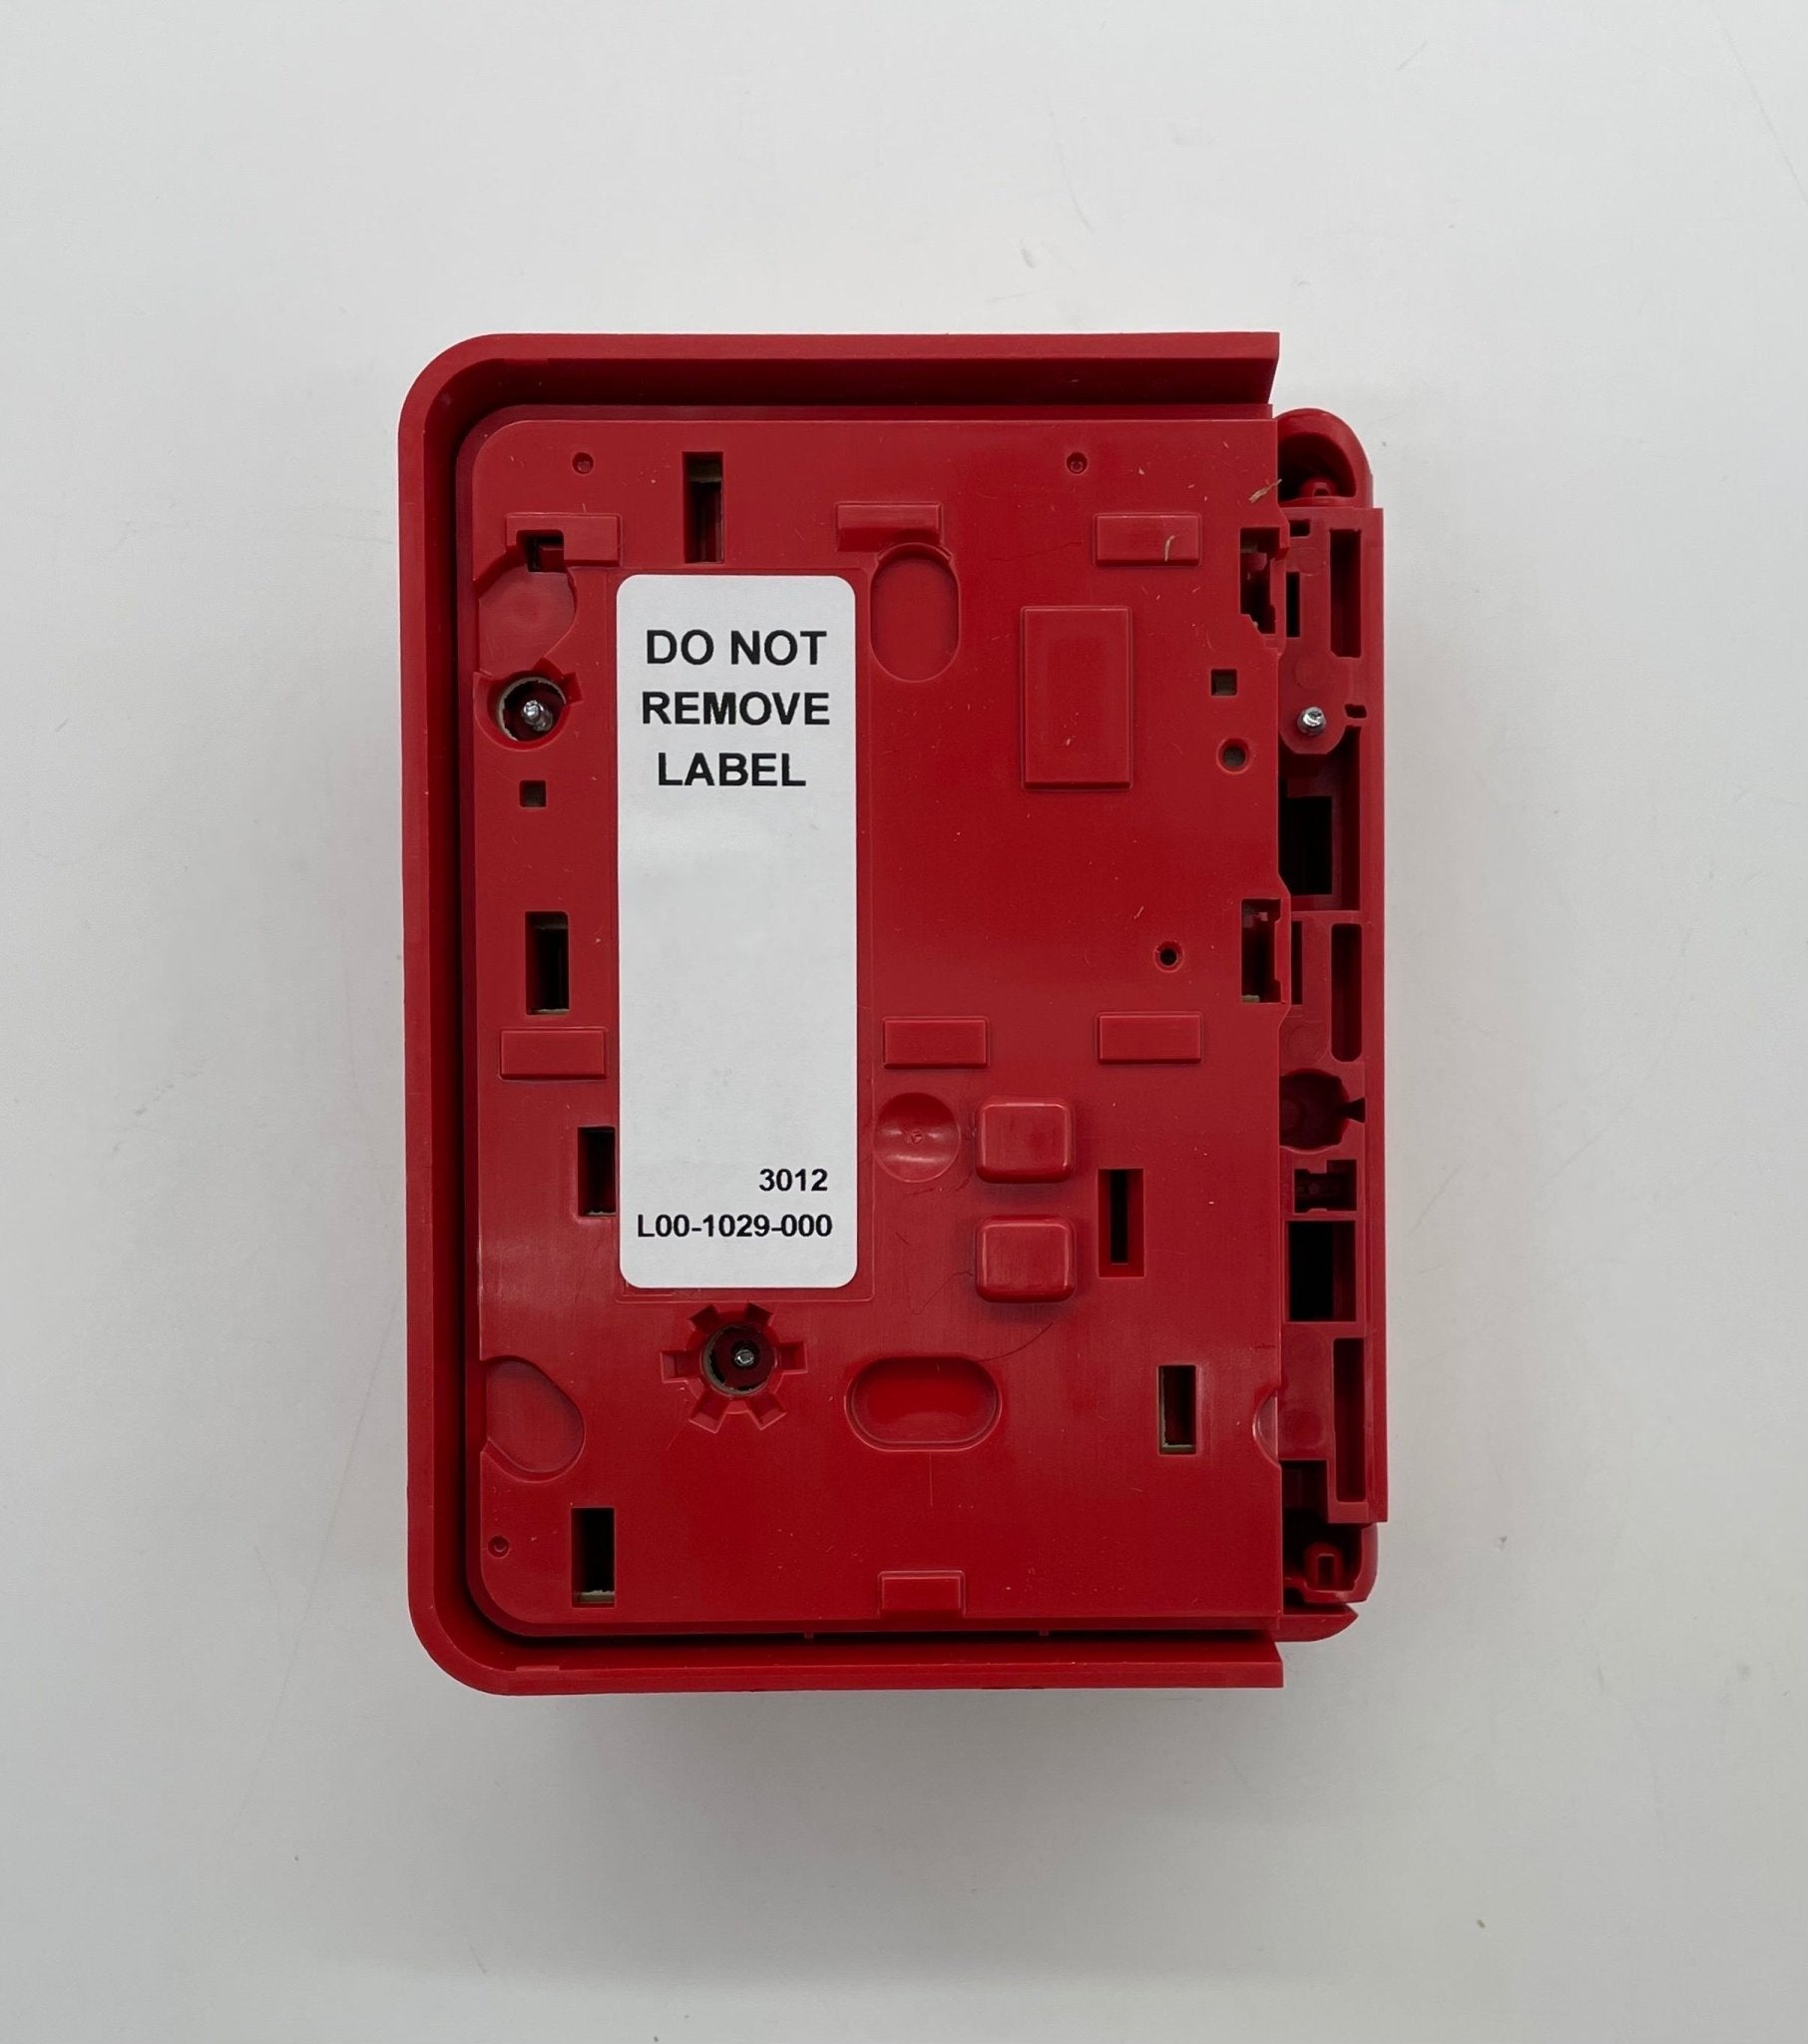 Firelite W-BG12LXSP - The Fire Alarm Supplier